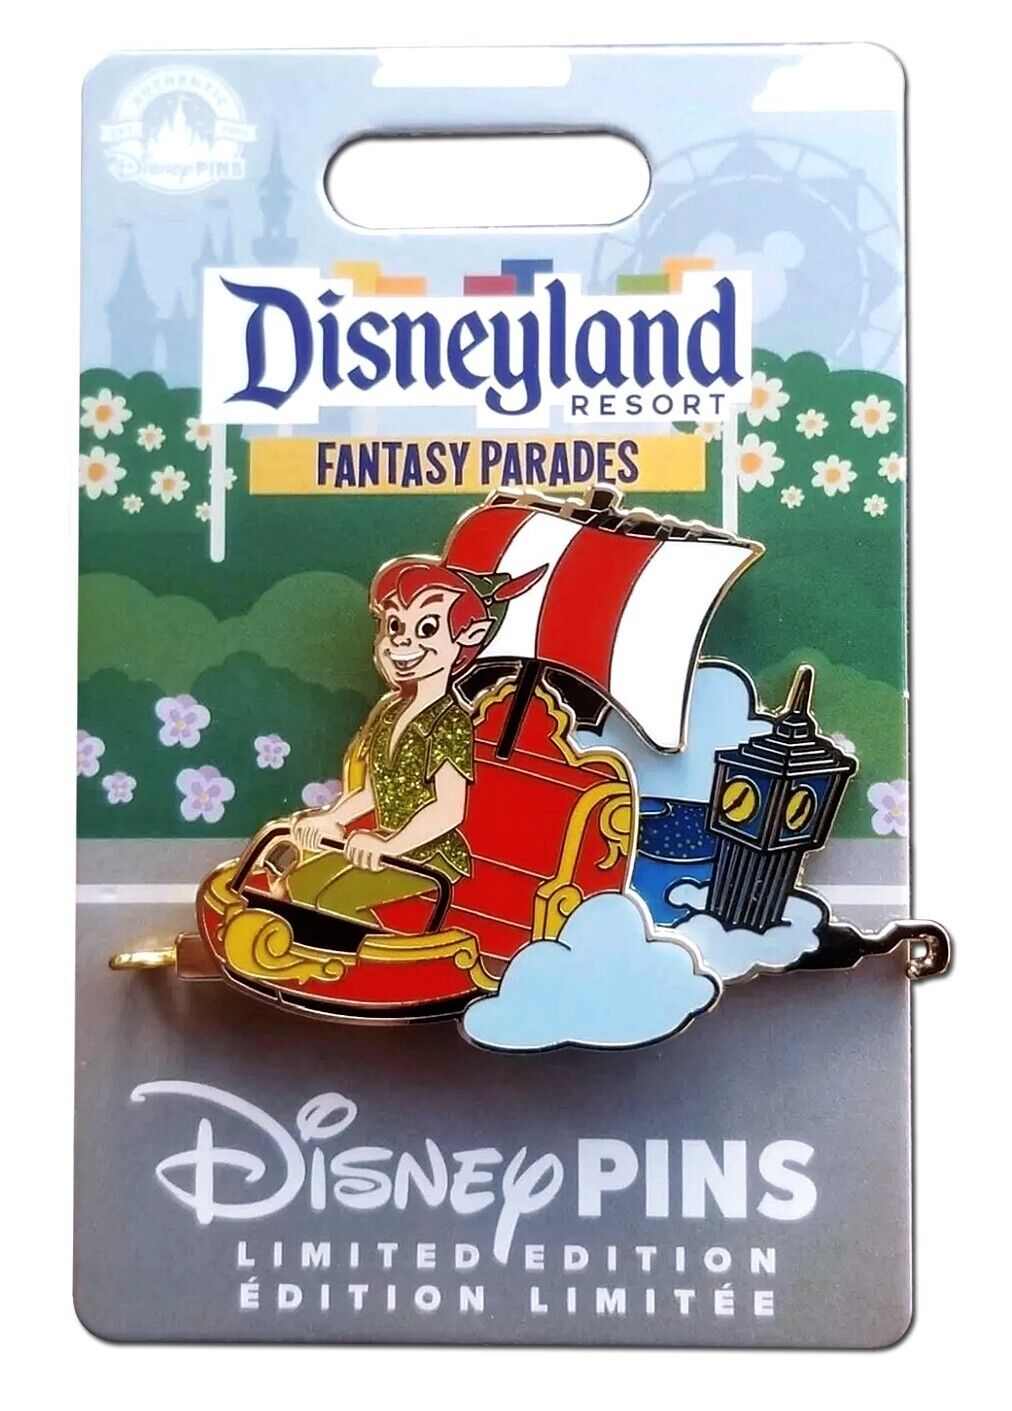 Disney Pin Peter Pan Disneyland Parades LE 2500